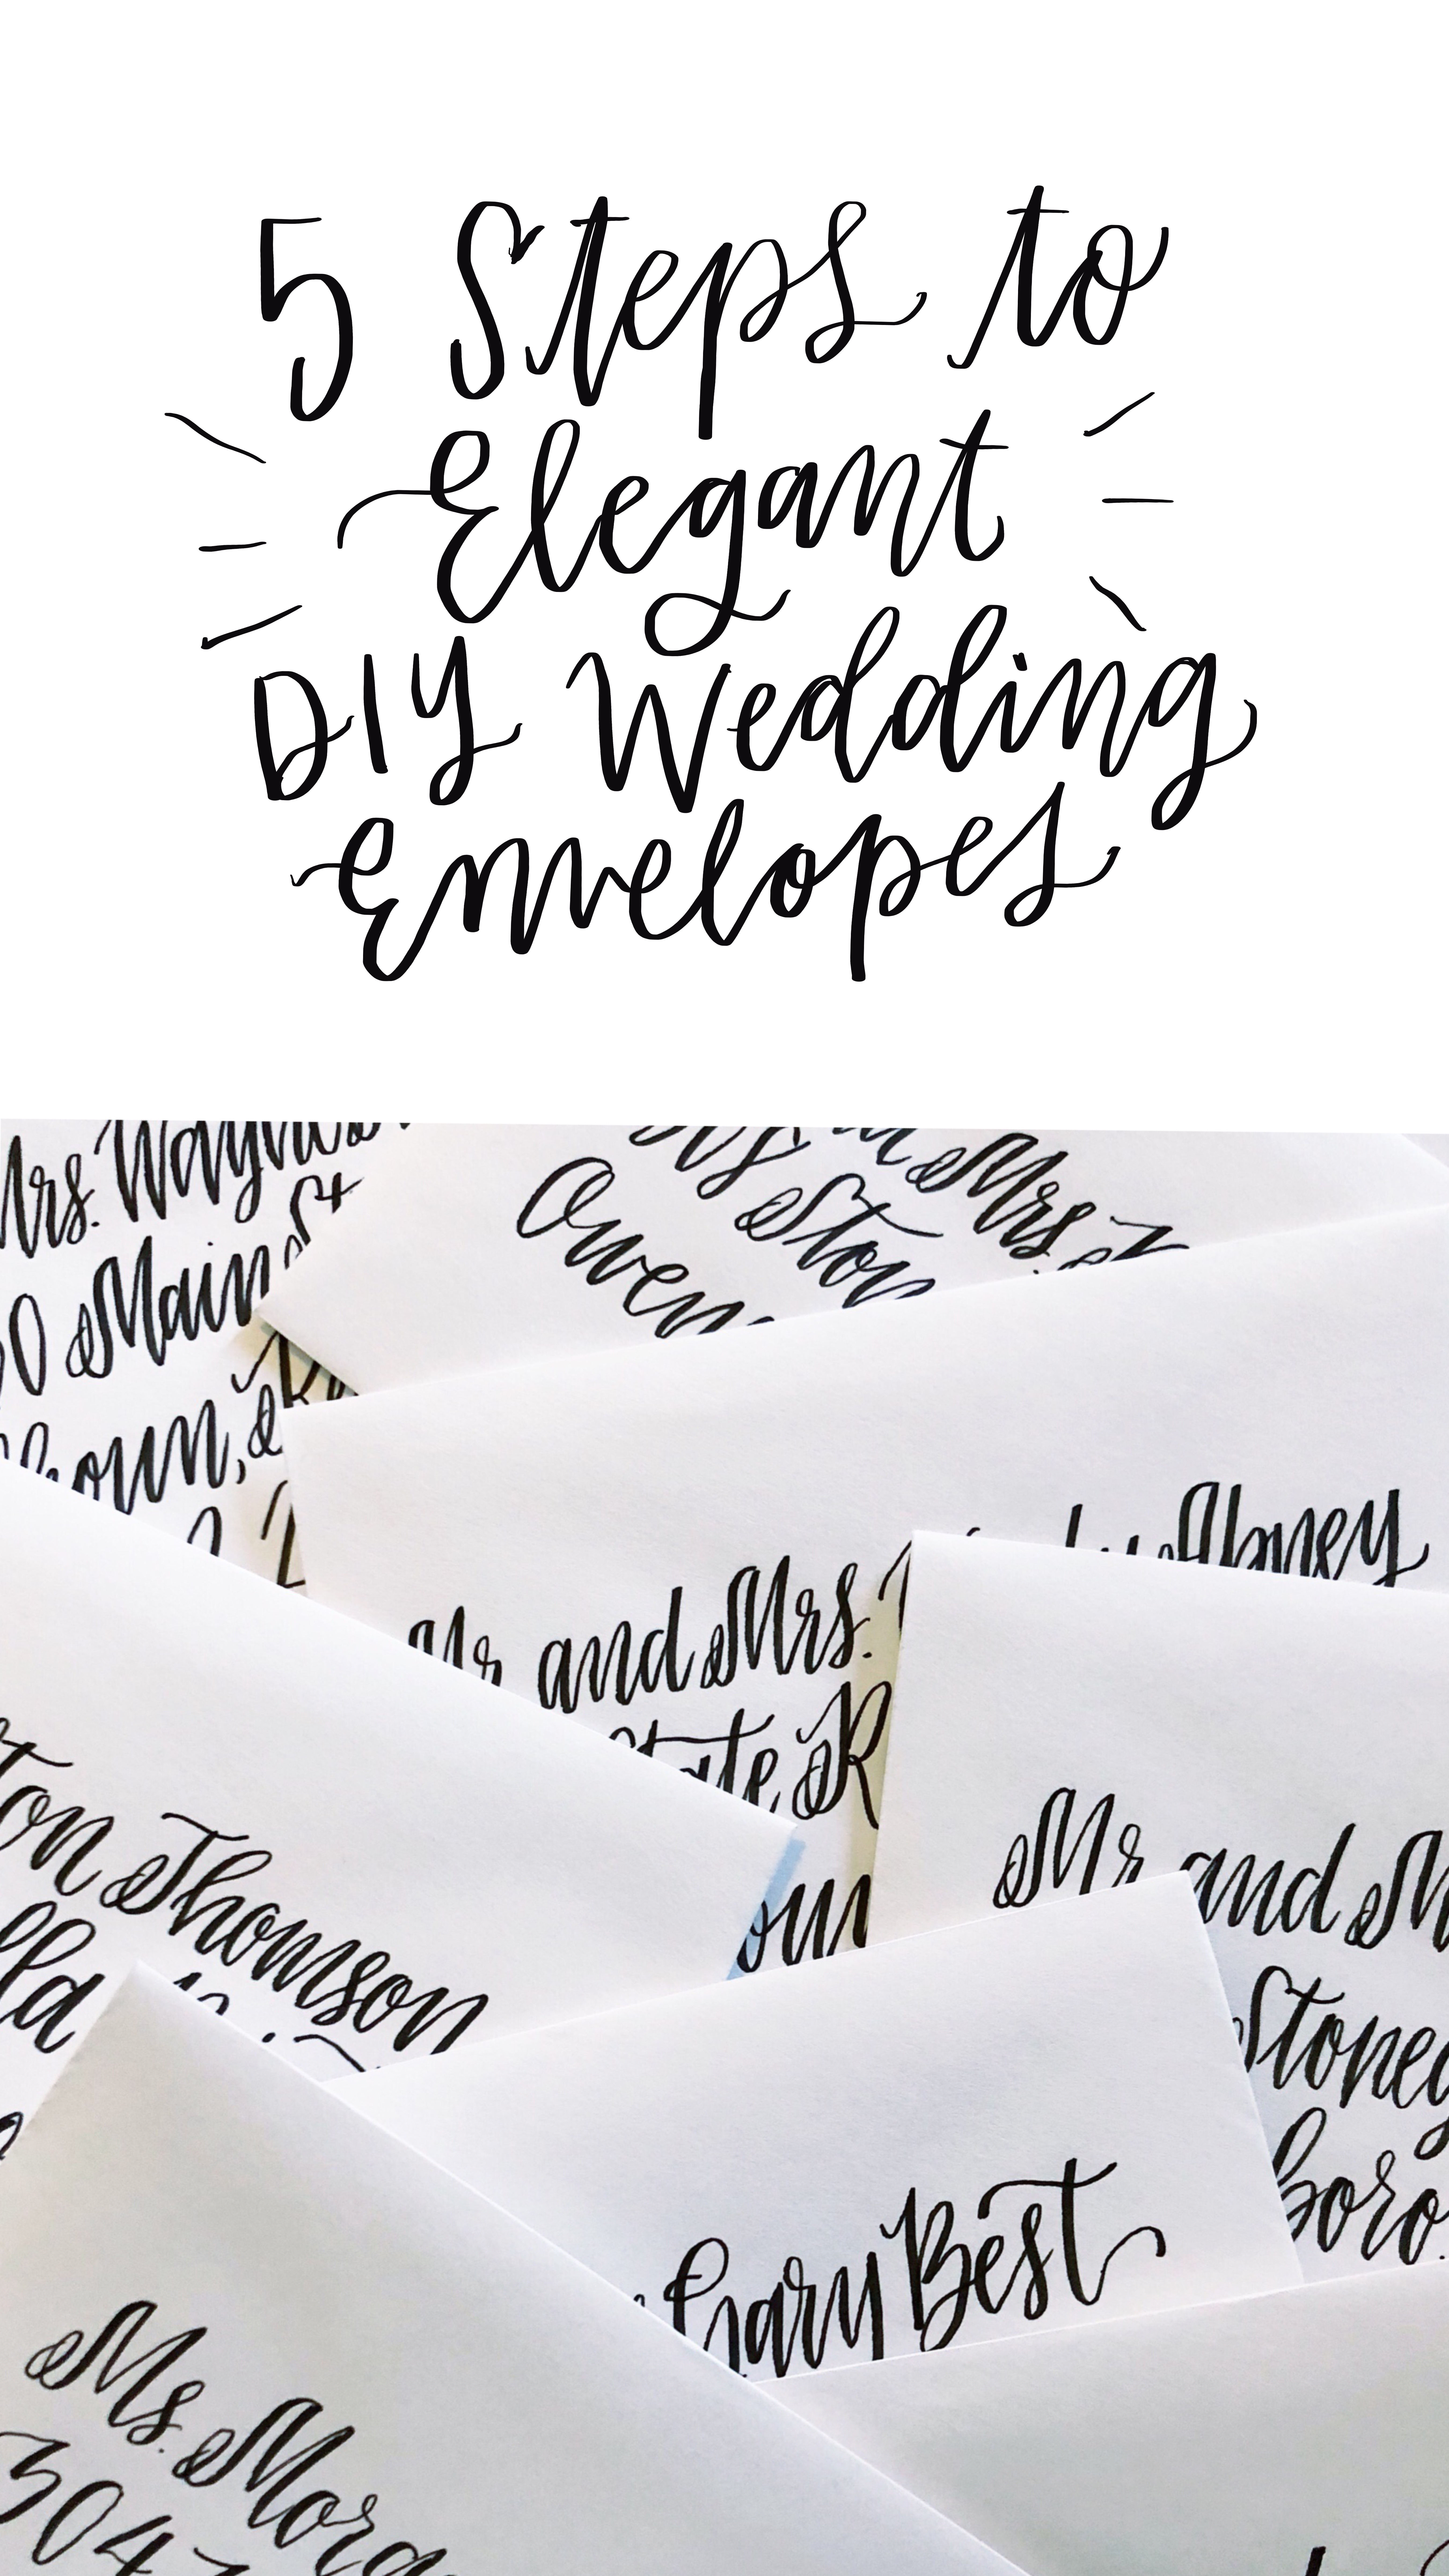 5 Steps to Elegant DIY Wedding Envelopes - Tombow USA Blog